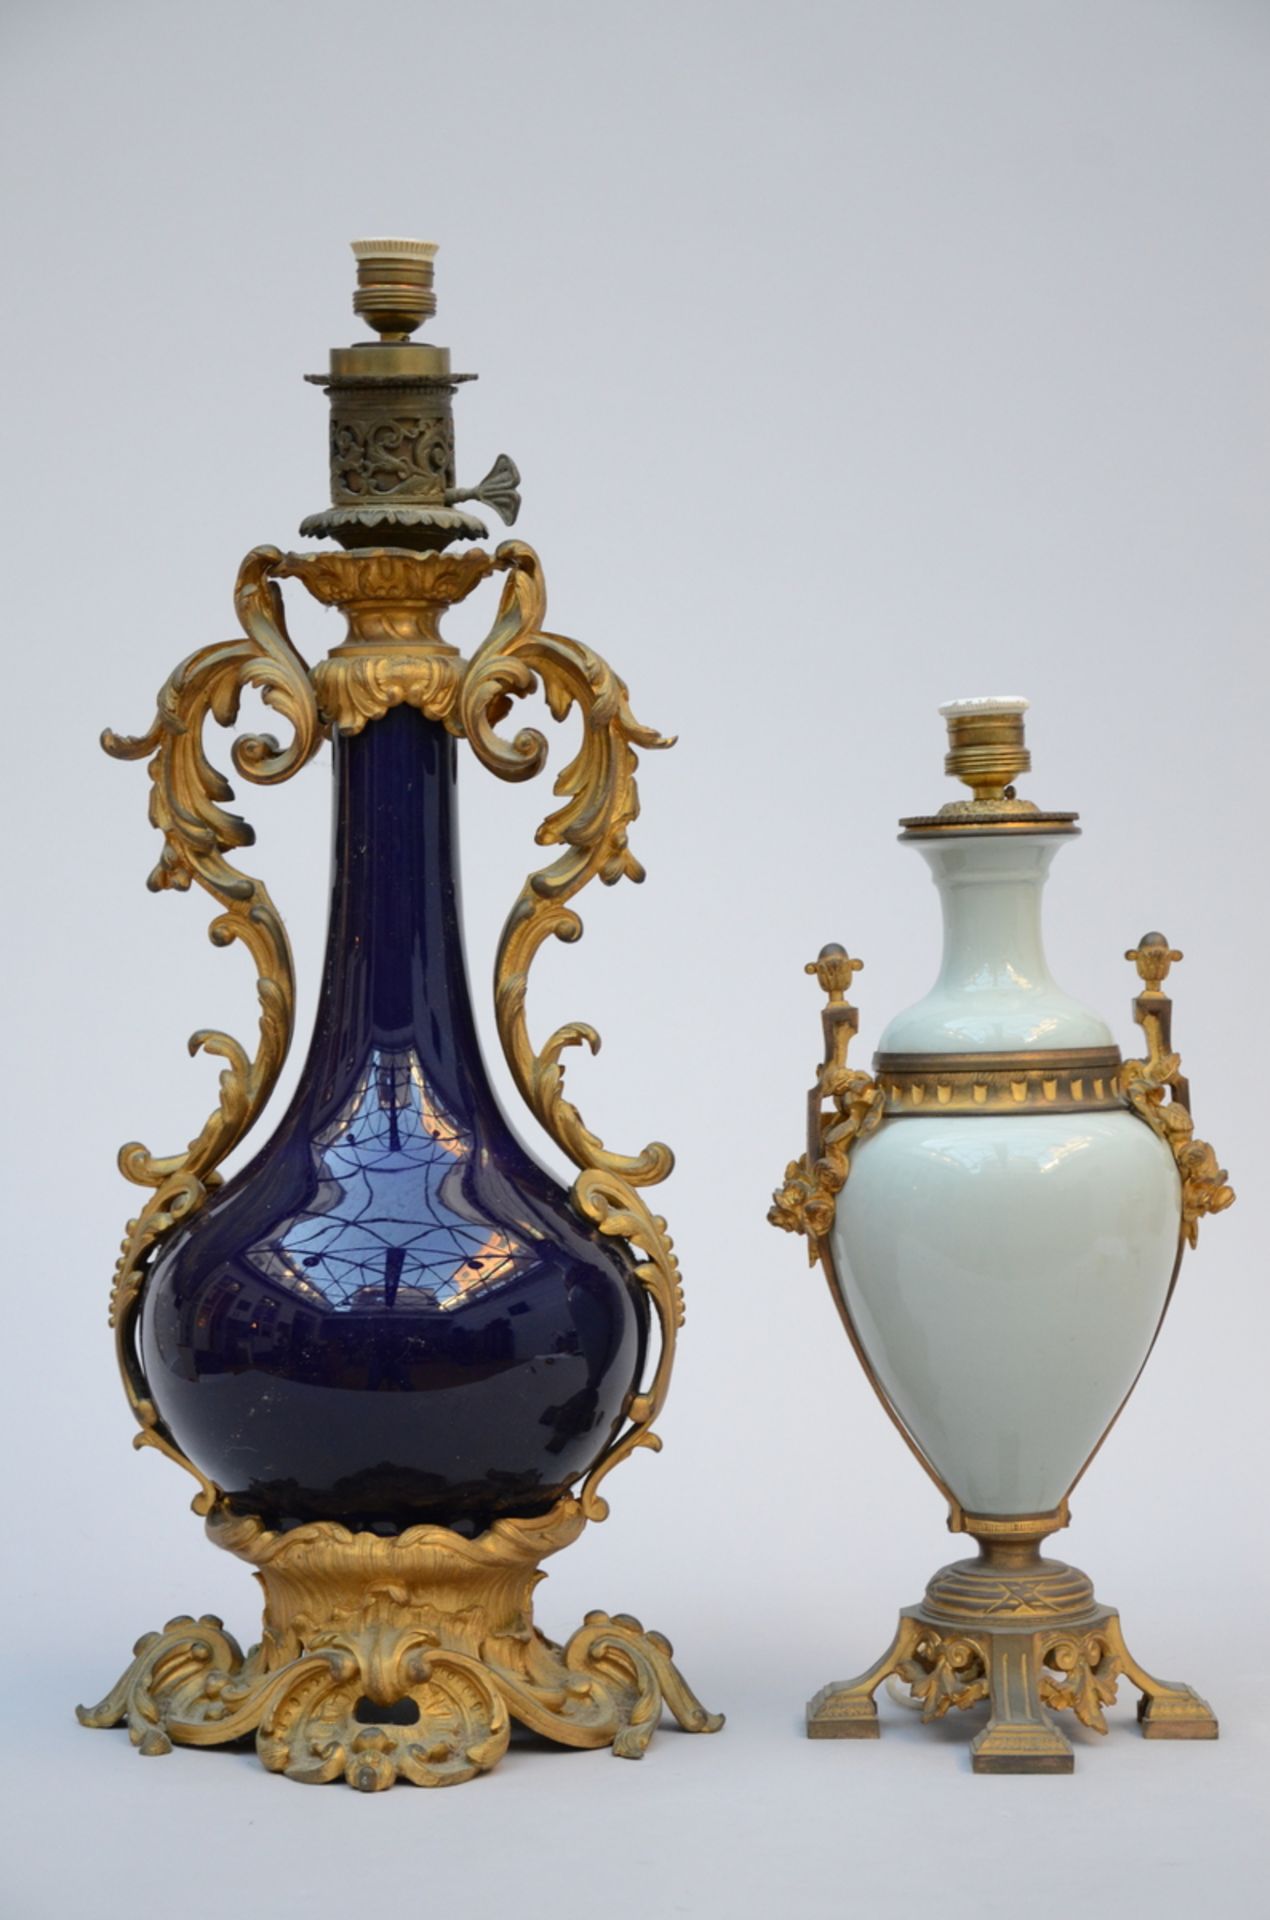 Two porcelain lamps with gilt bronze mounts (h46 - 67 cm)